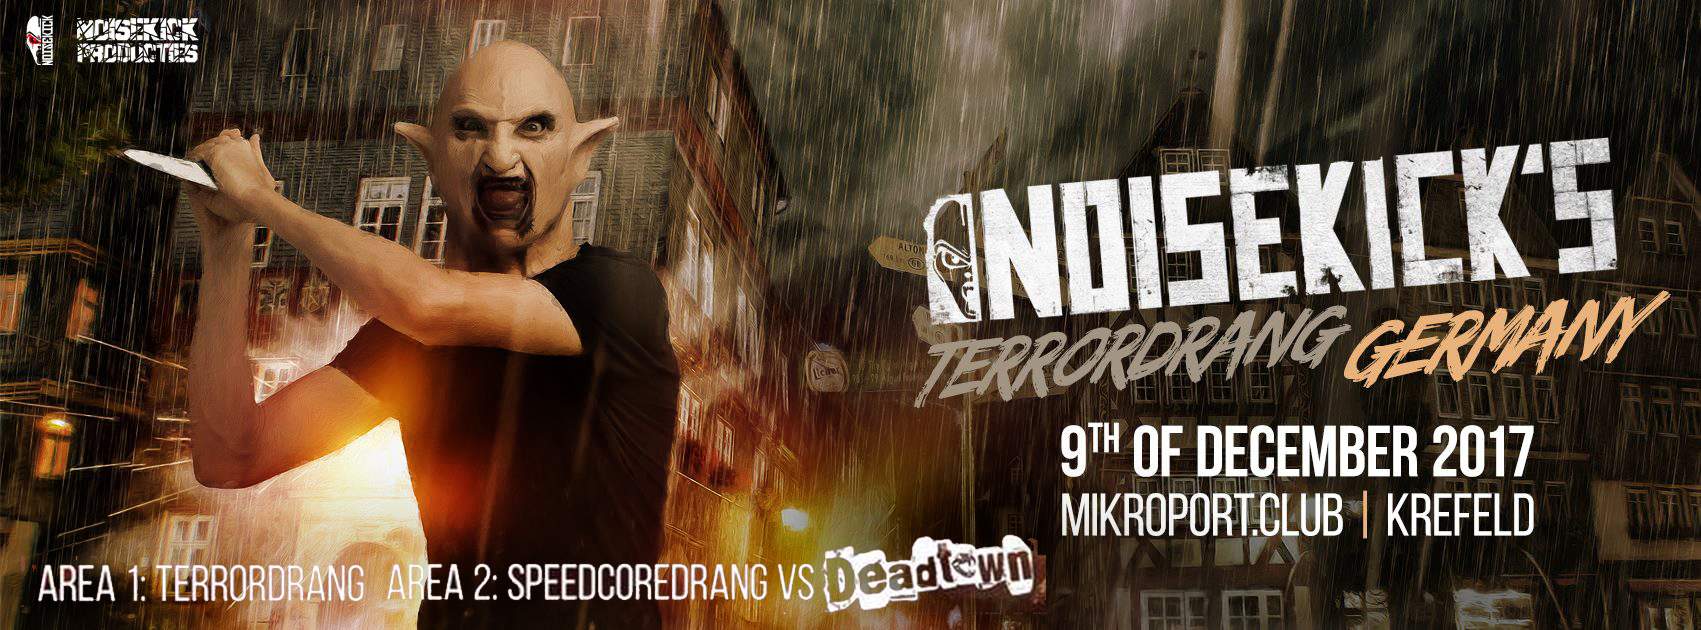 Noisekick's terrordrang germany Speedcore Italia Deadtown